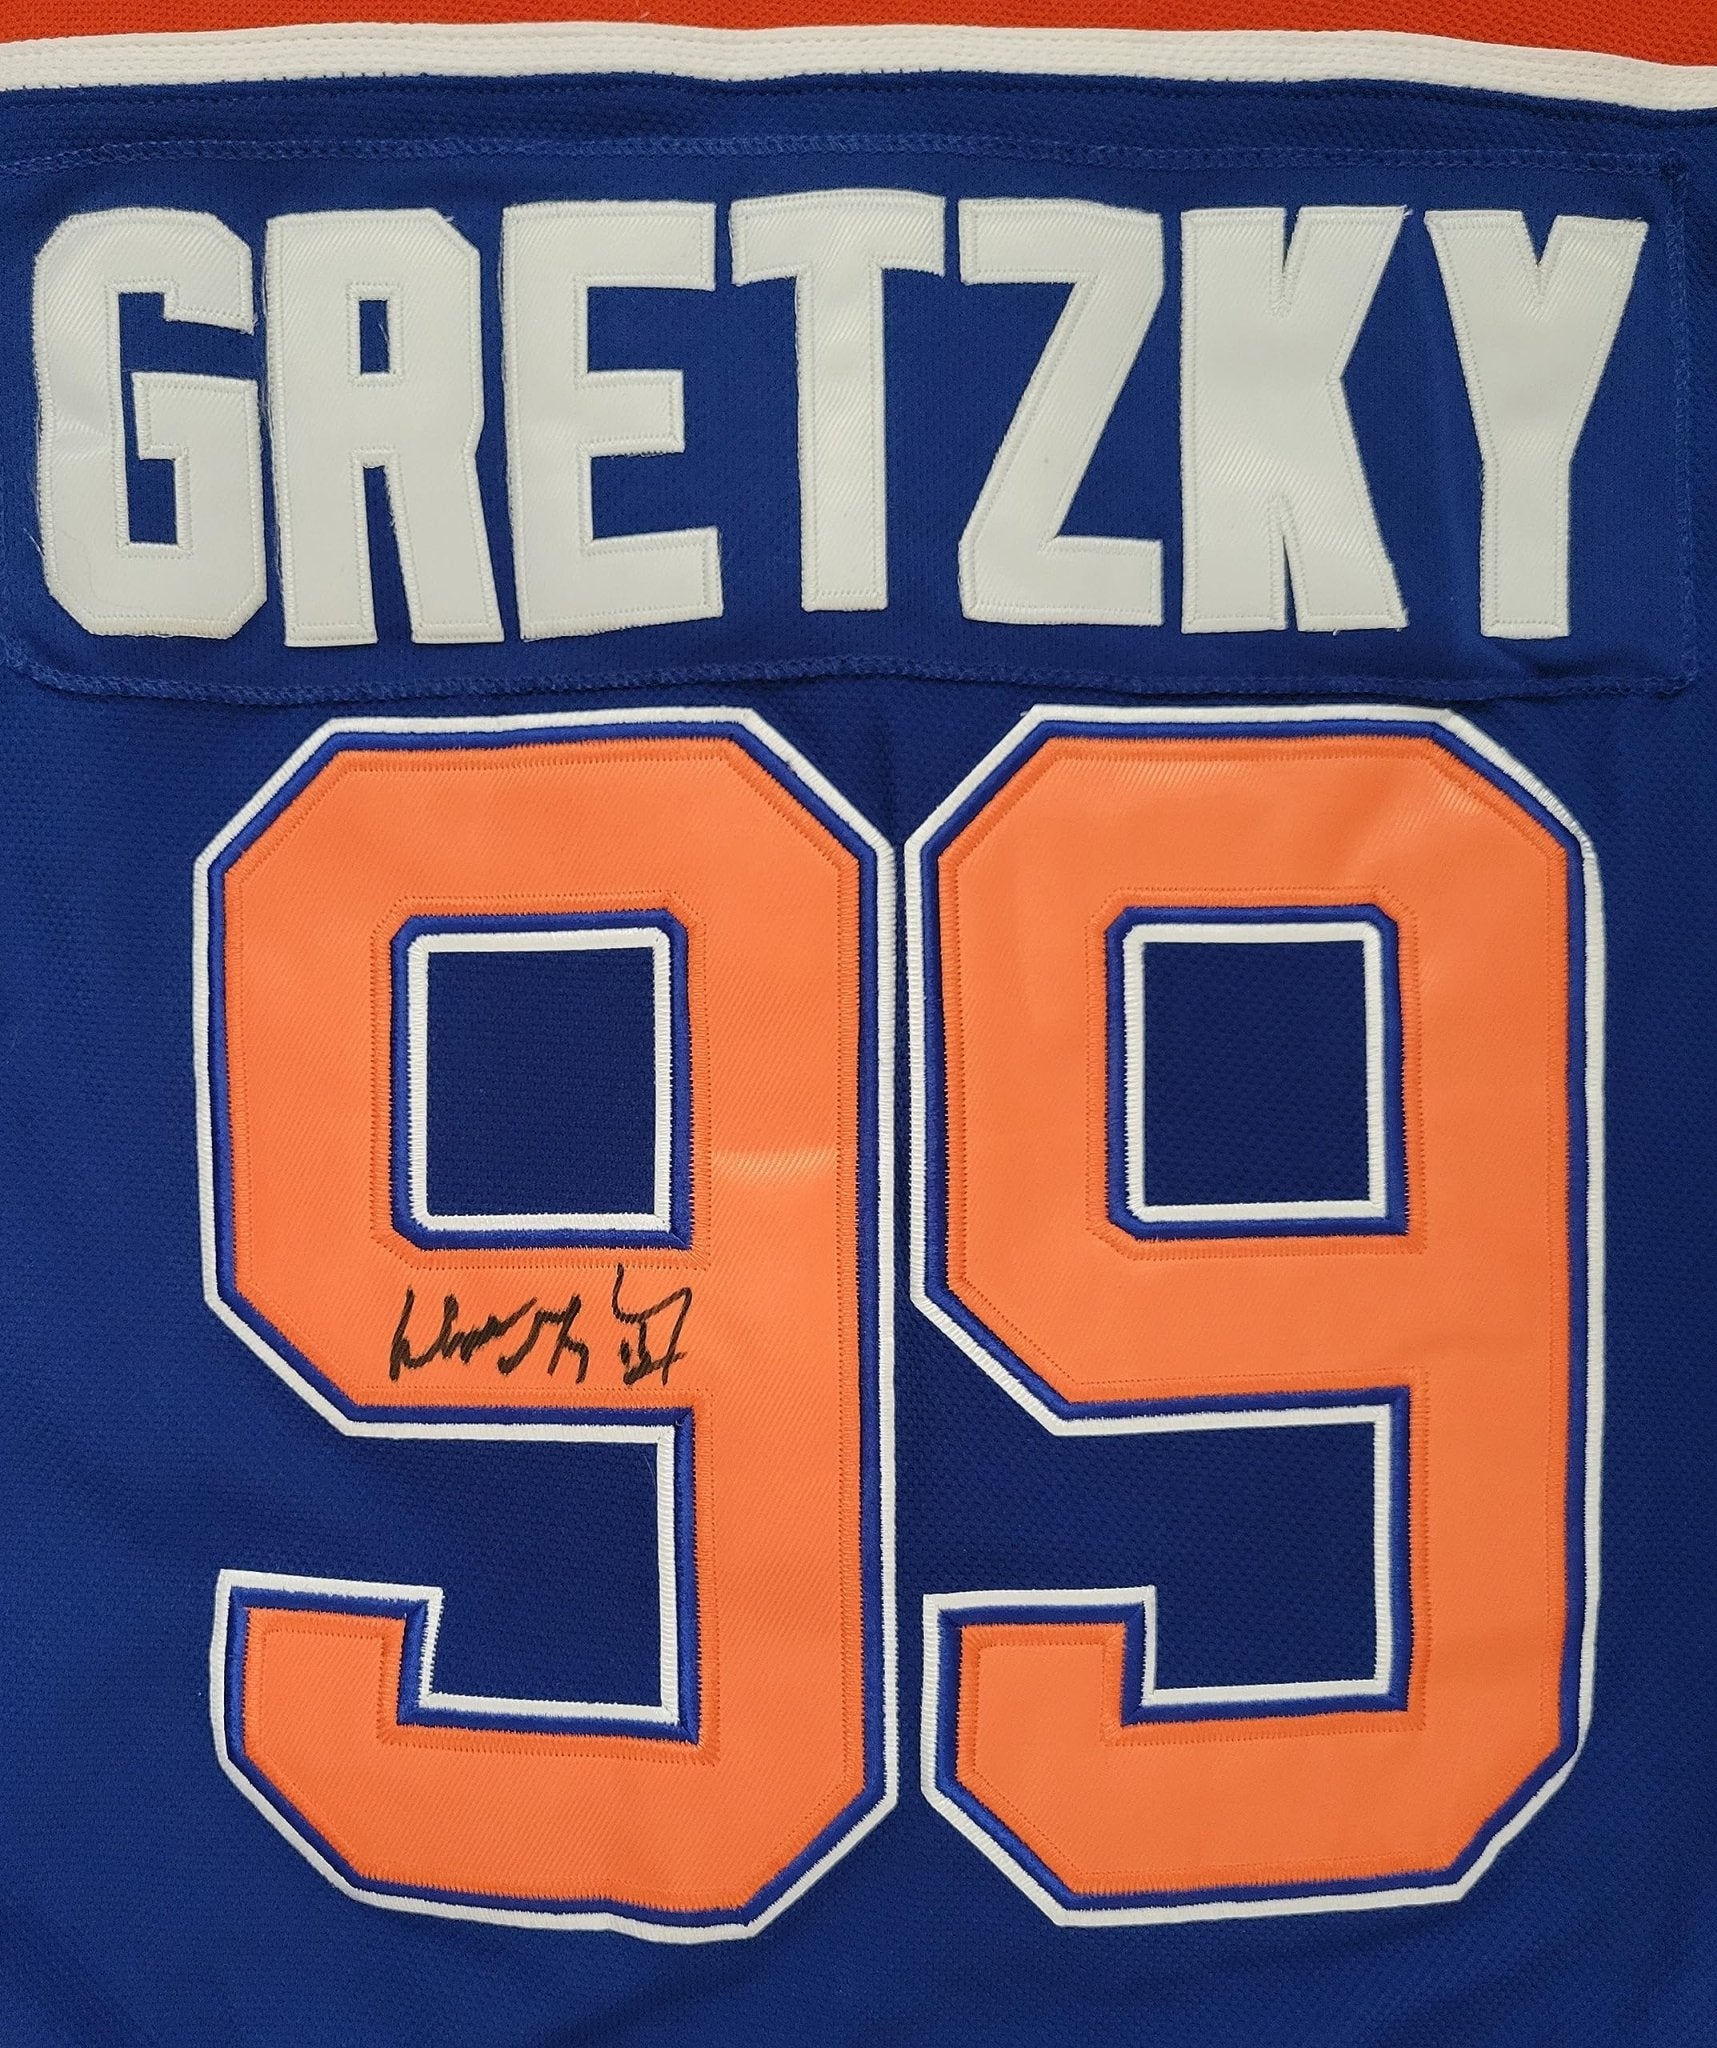 Wayne Gretzky Autographed New York Rangers Hockey Jersey - The